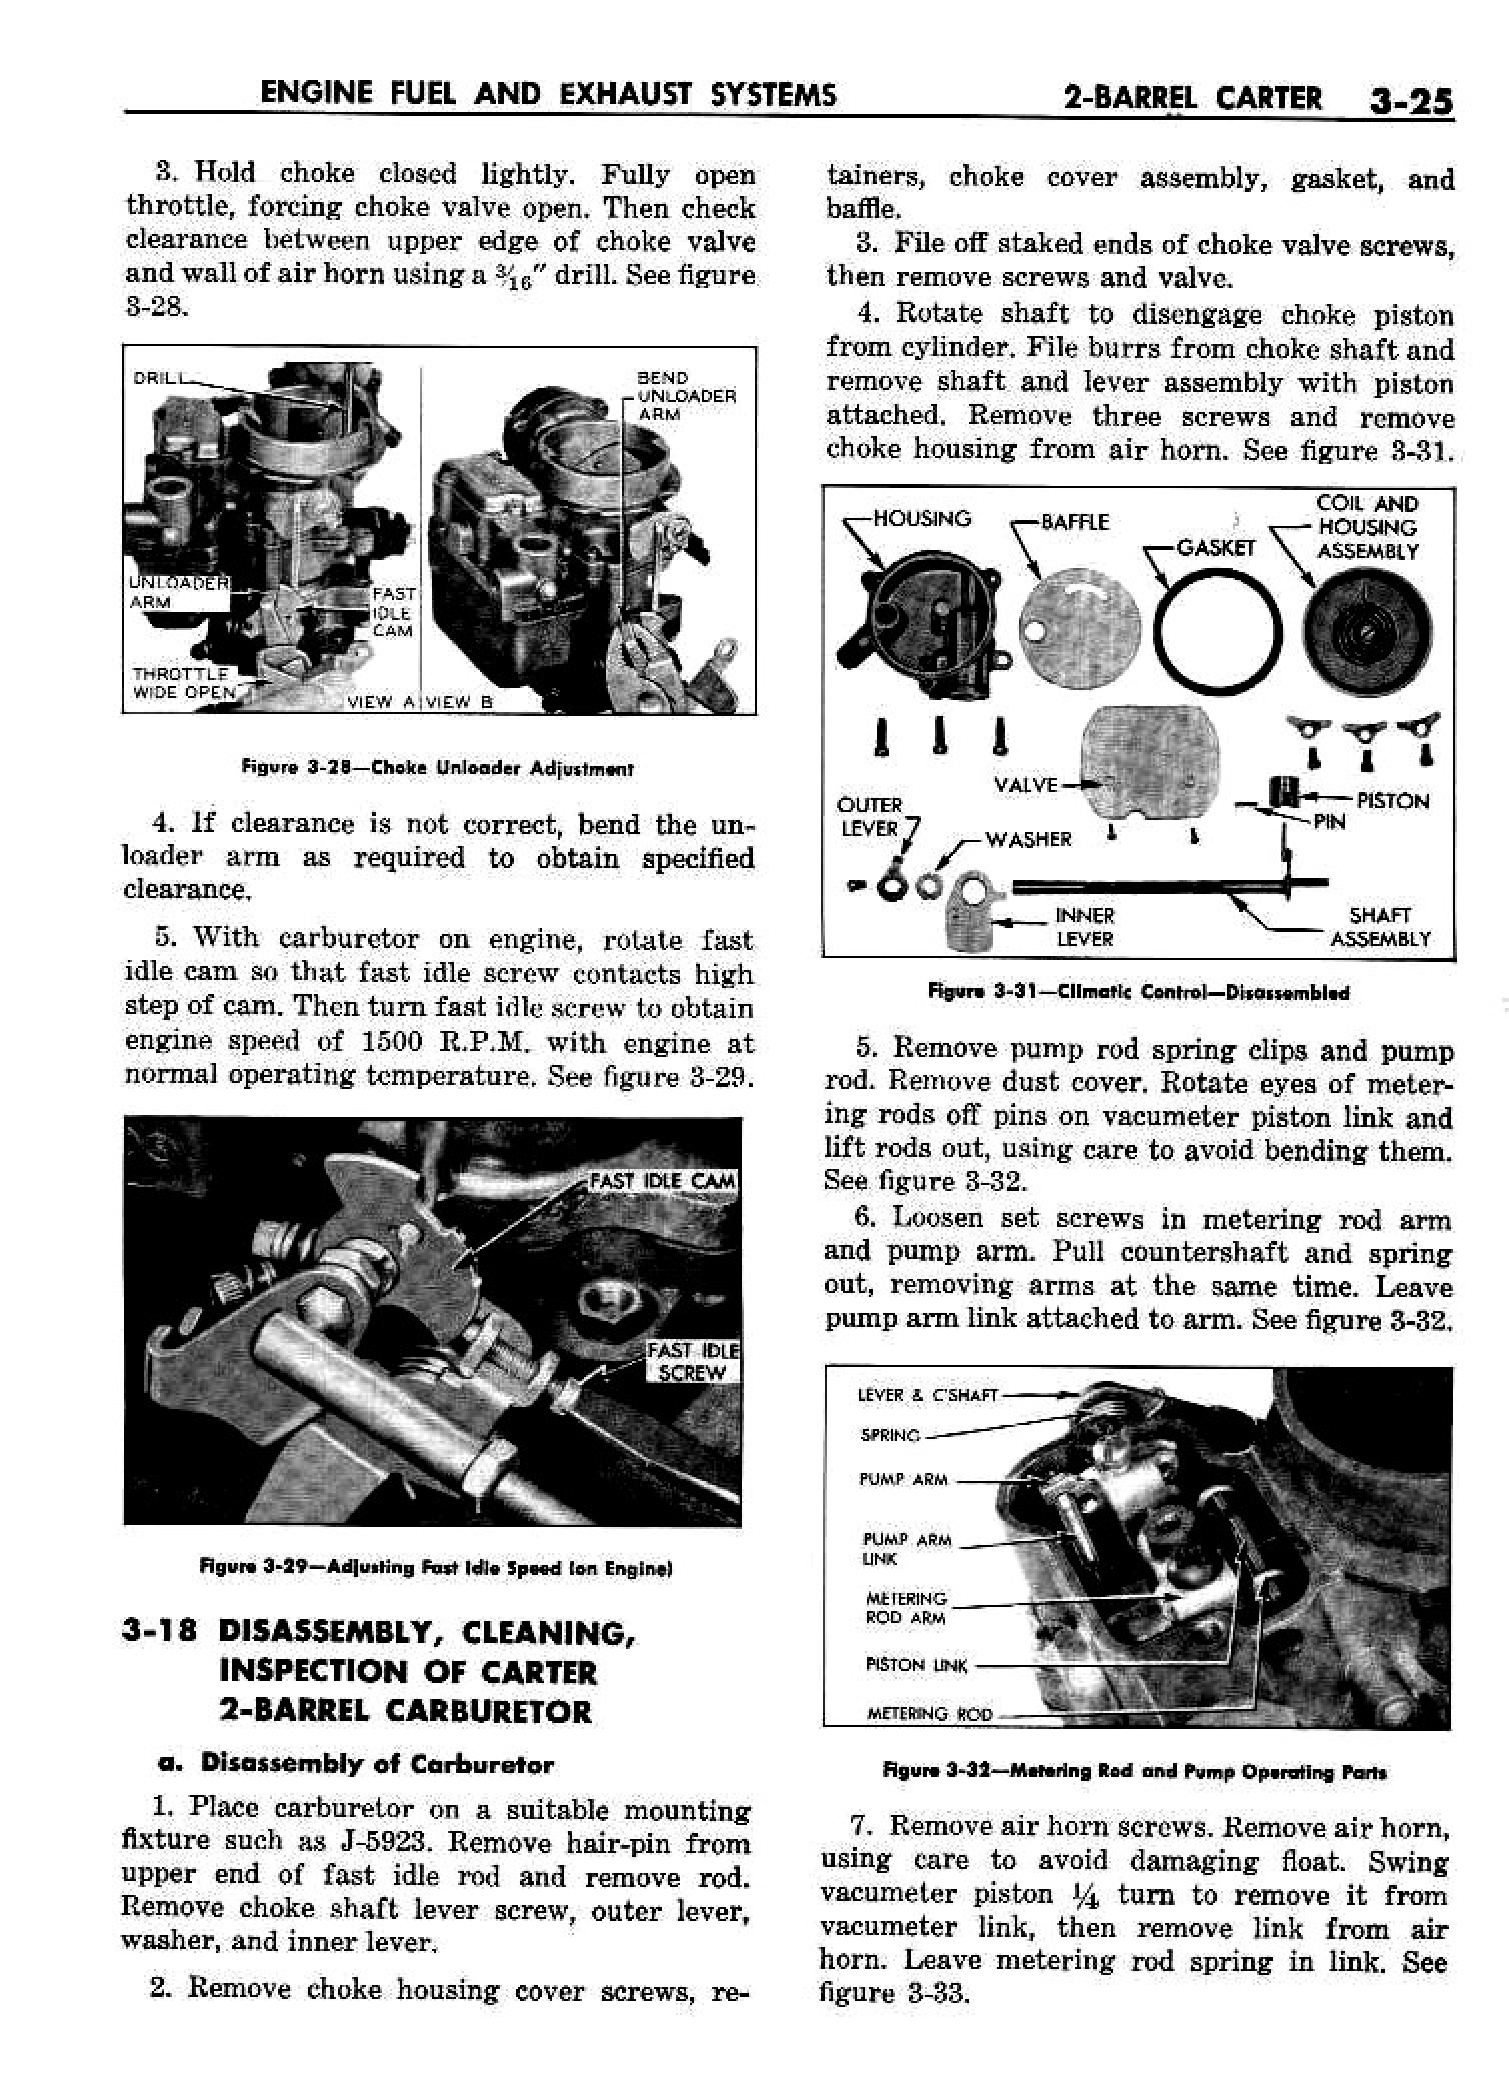 n_04 1958 Buick Shop Manual - Engine Fuel & Exhaust_25.jpg